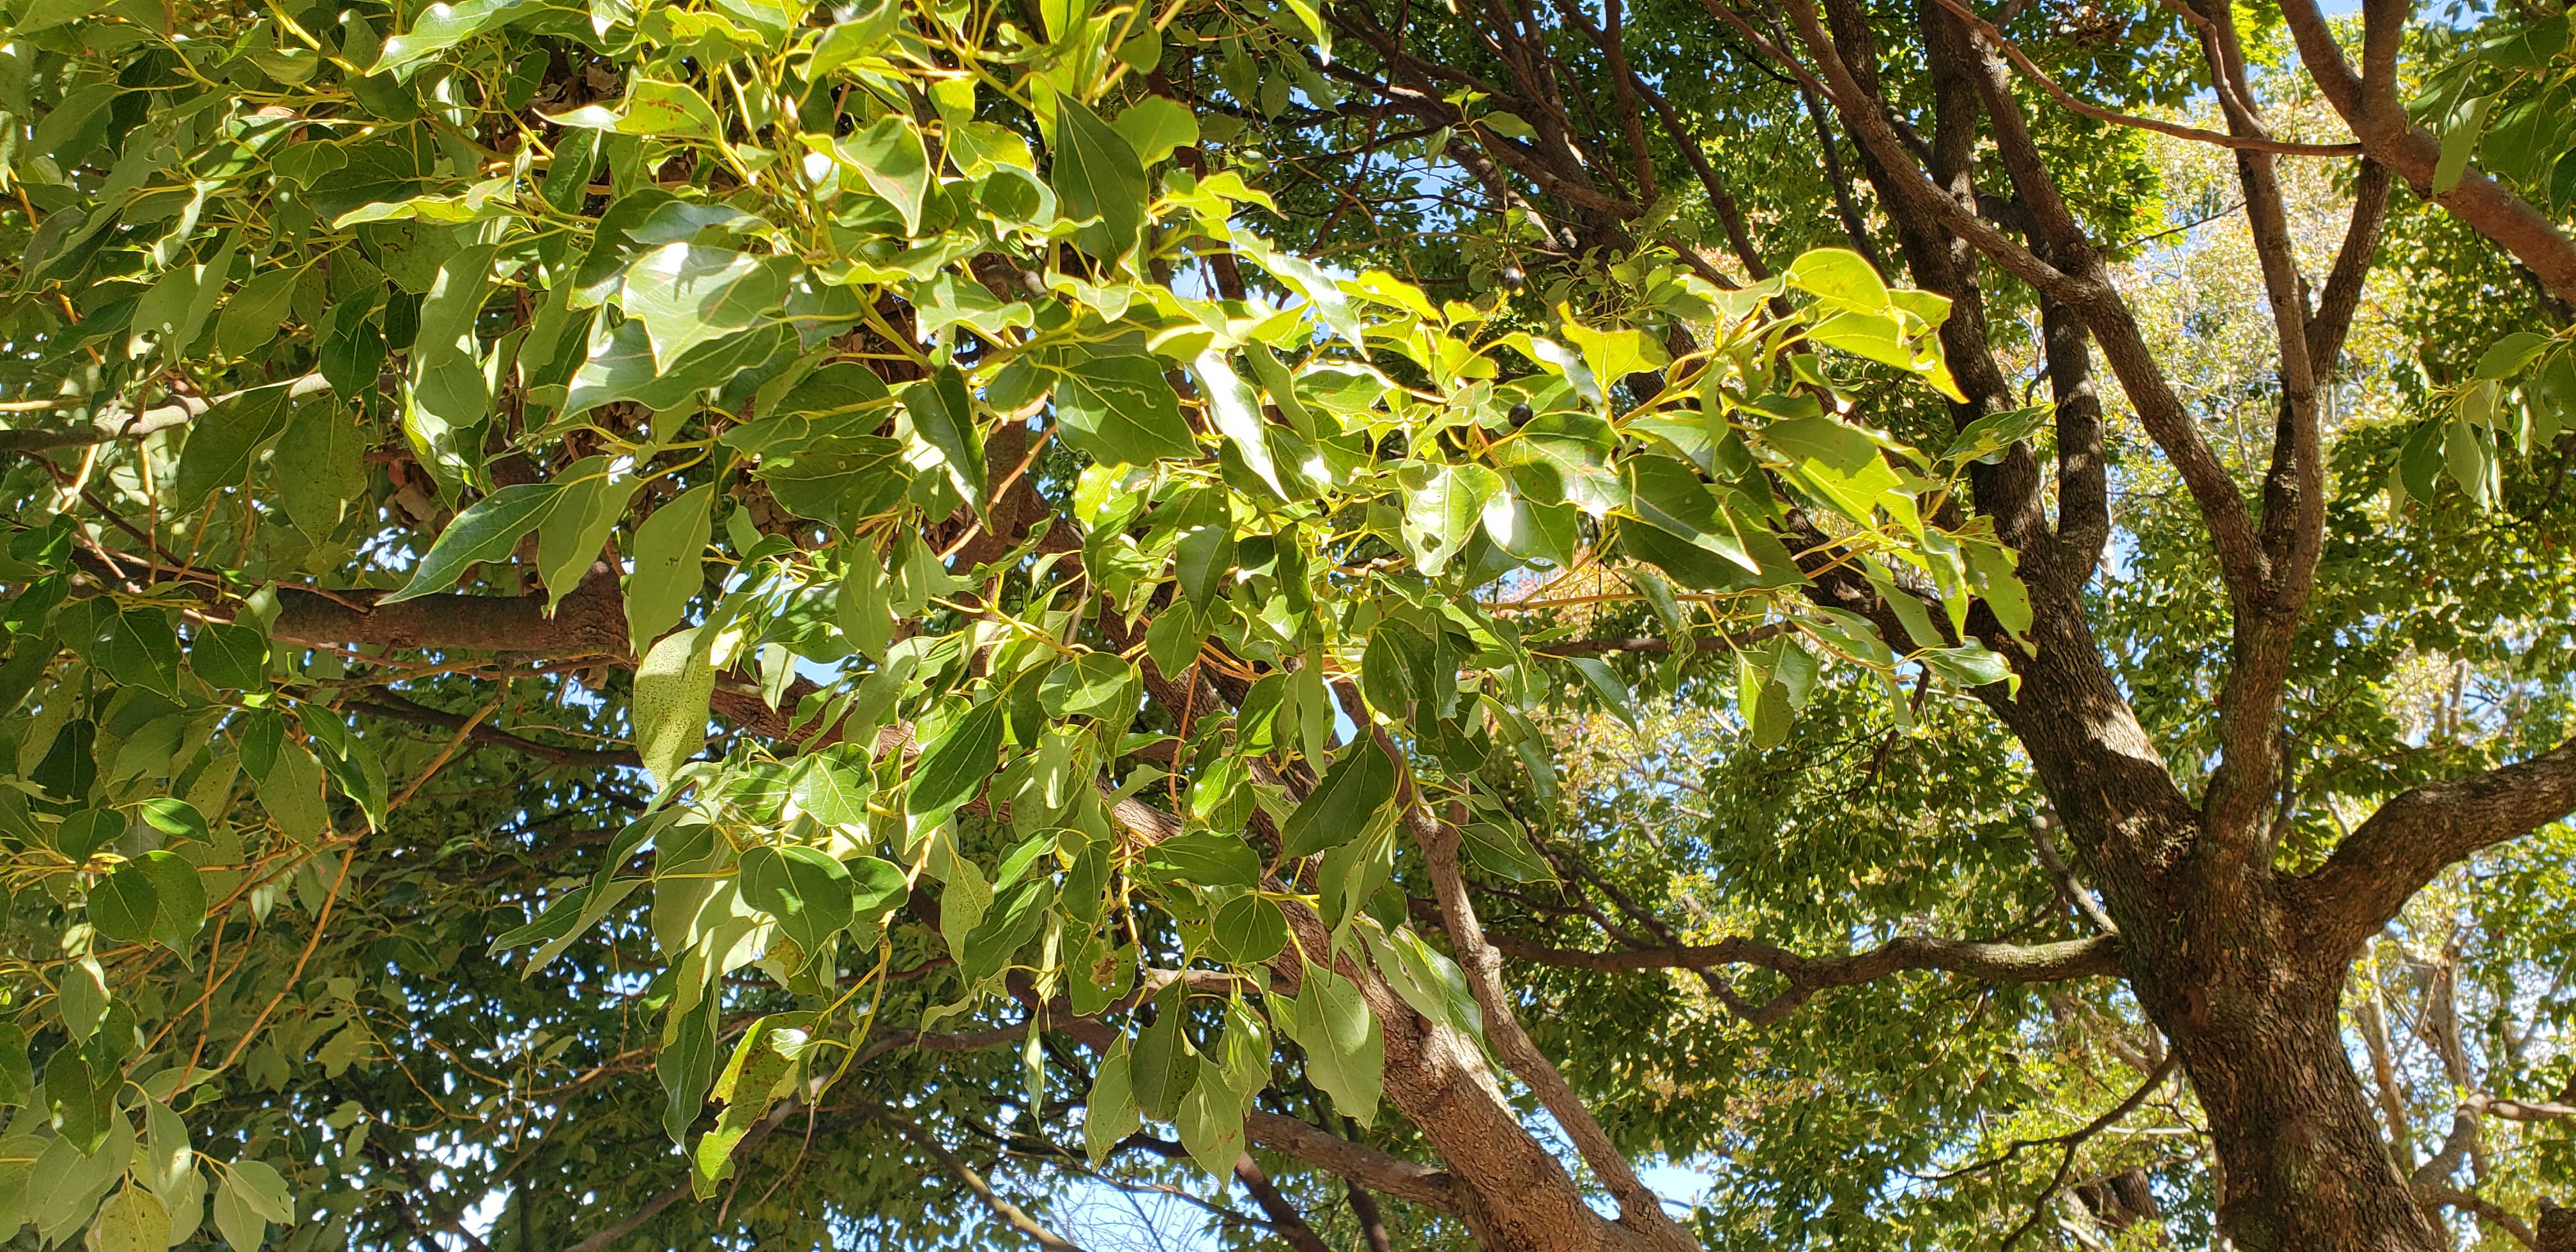 Cinnamomum camphora plantplacesimage20181208_090911.jpg